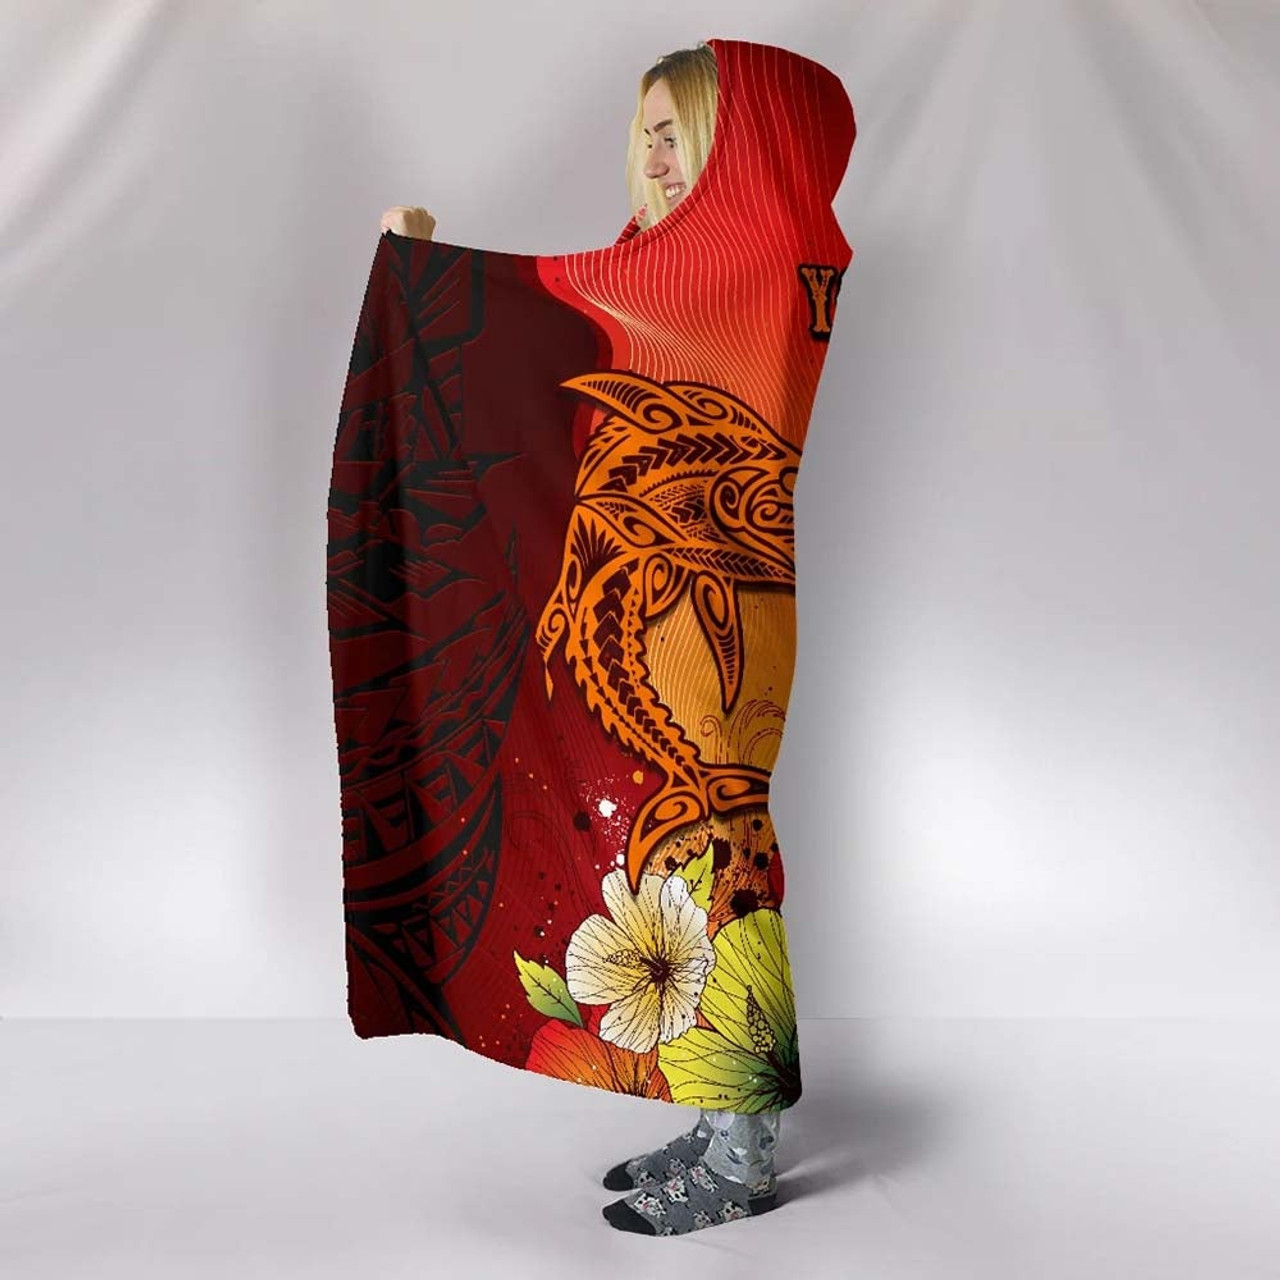 Guam Custom Personalised Hooded Blankets - Tribal Tuna Fish 4